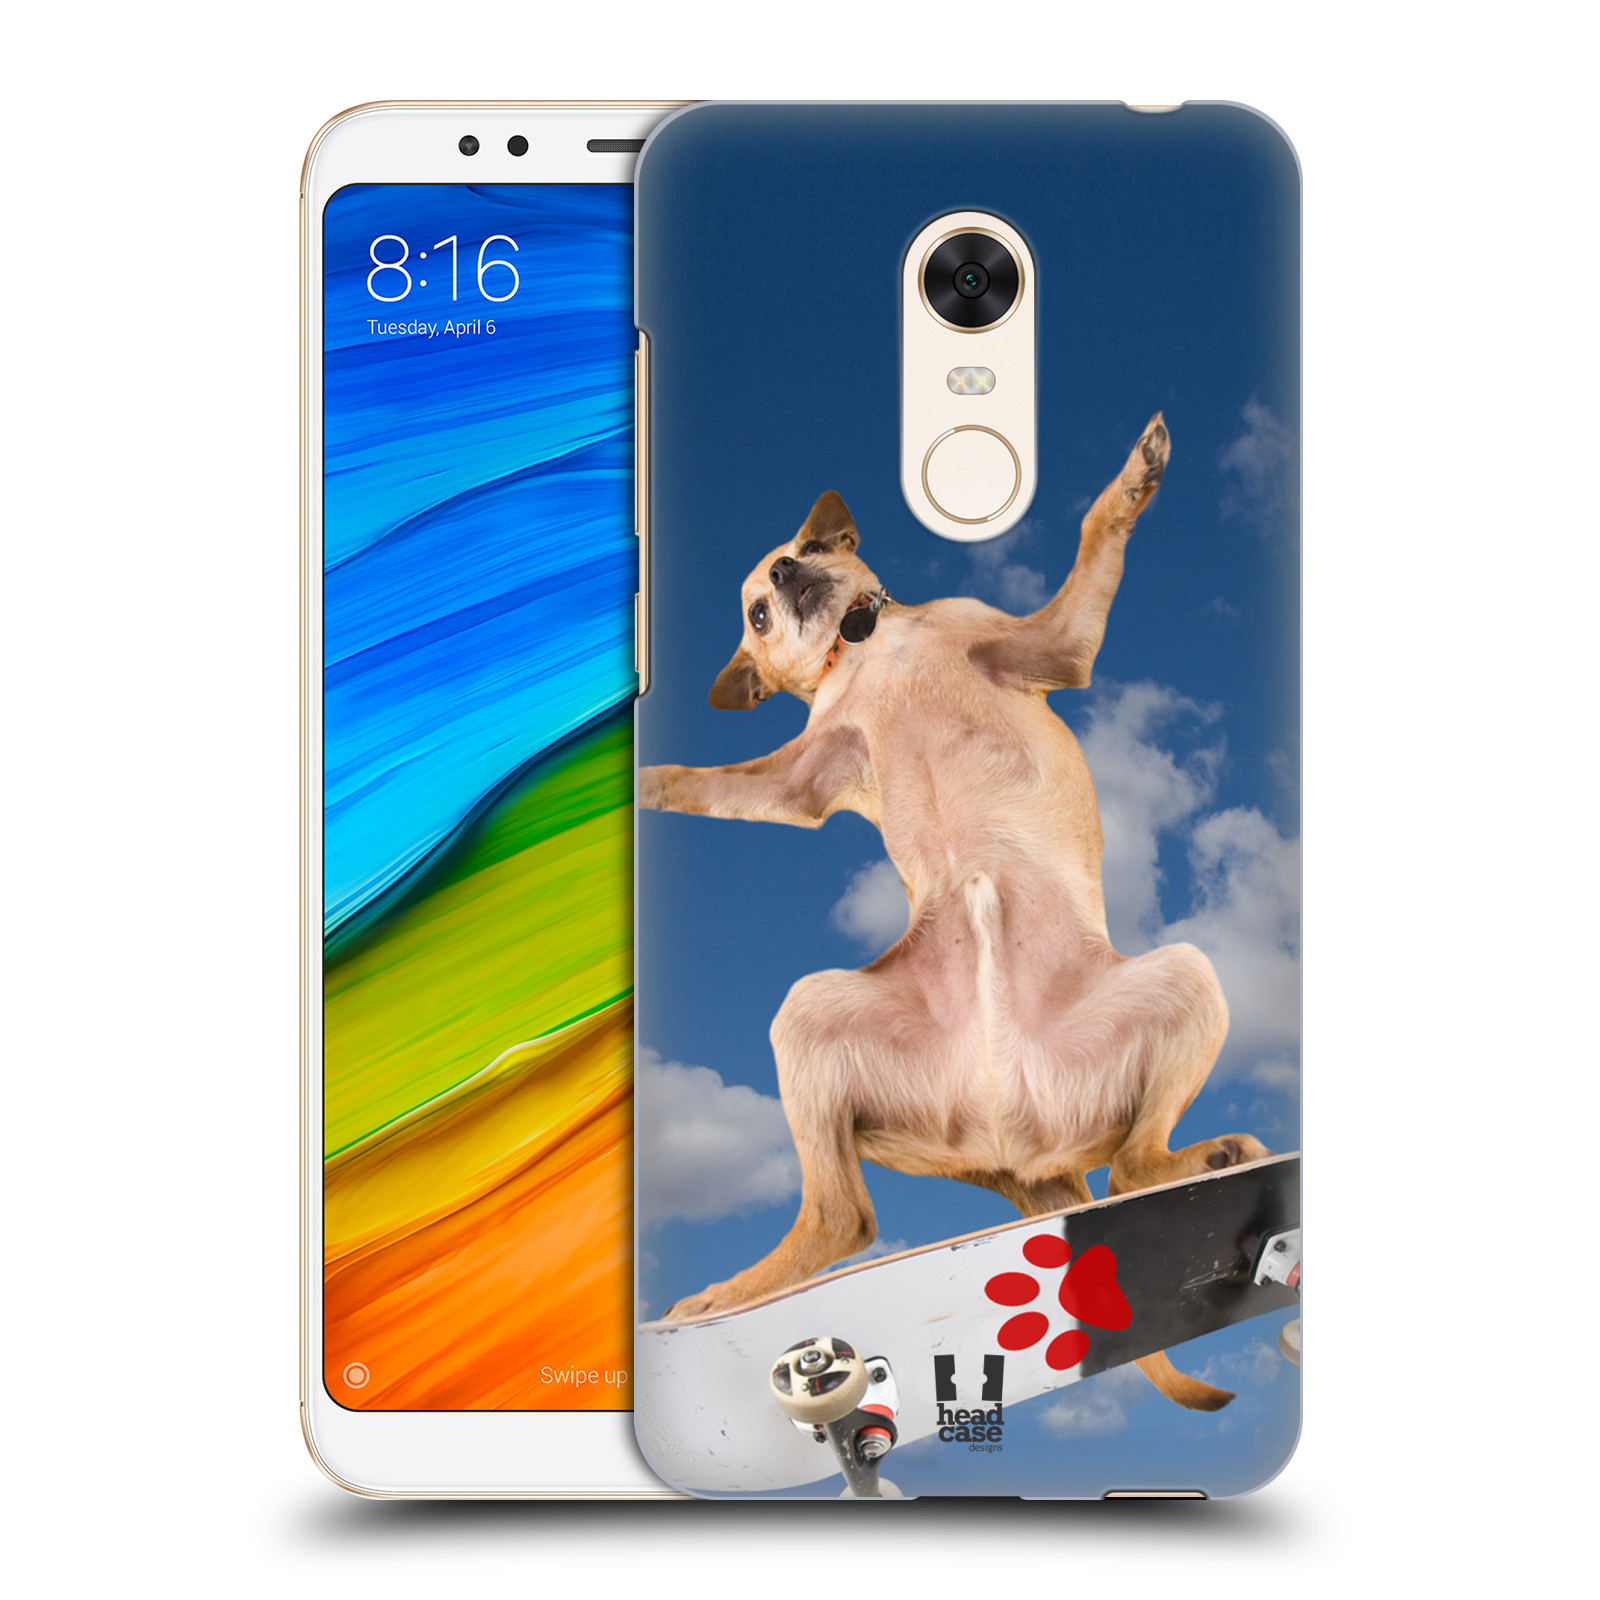 HEAD CASE plastový obal na mobil Xiaomi Redmi 5 PLUS vzor Legrační zvířátka pejsek skateboard